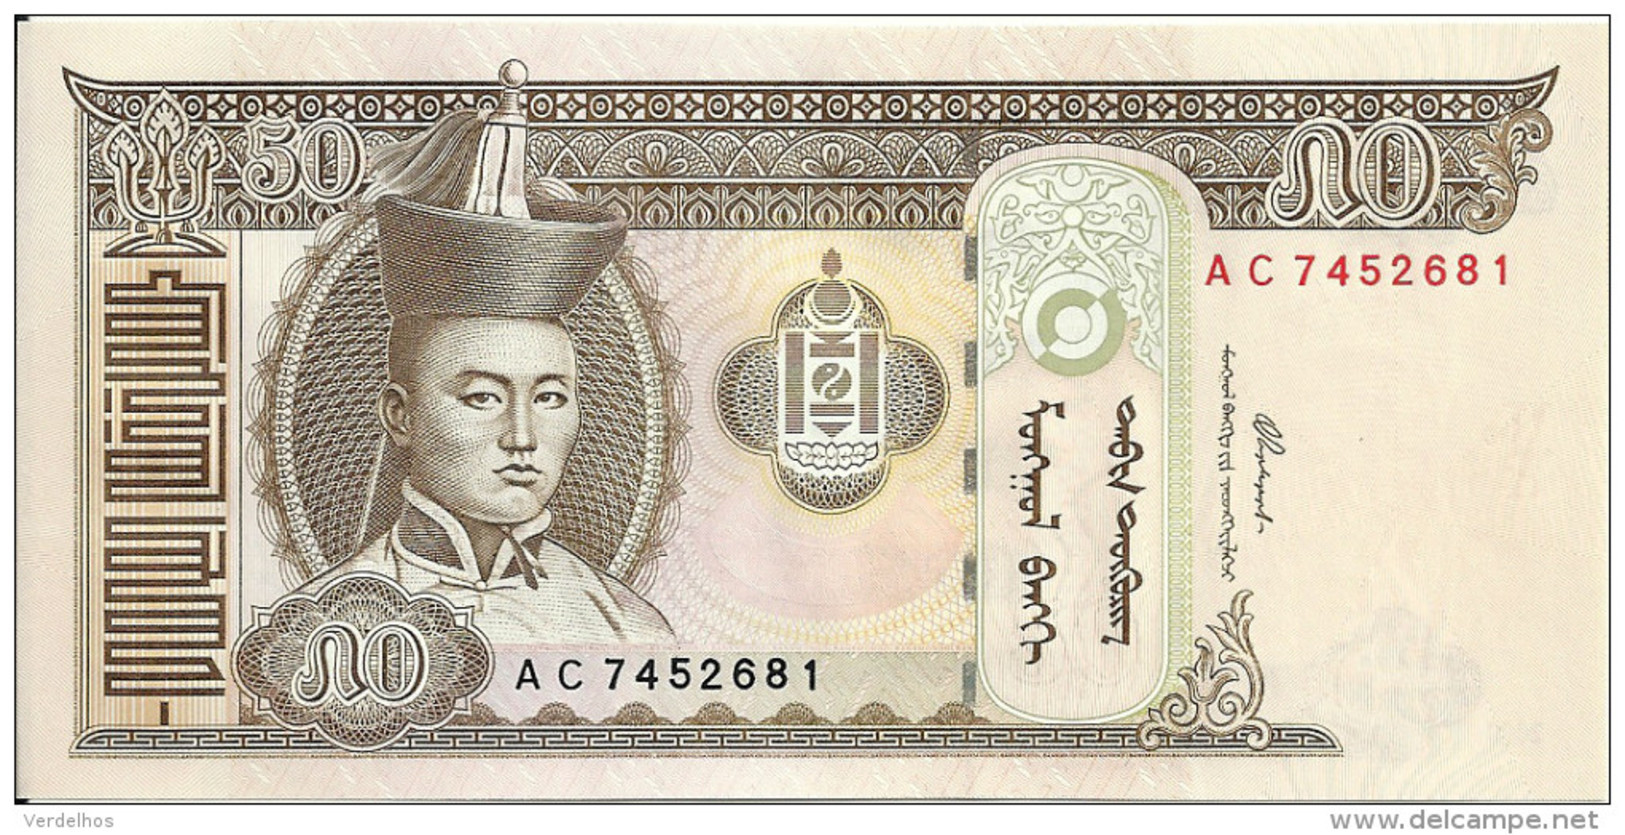 MONGOLIE 50 TUGRIK 2000 UNC P 64 - Mongolia